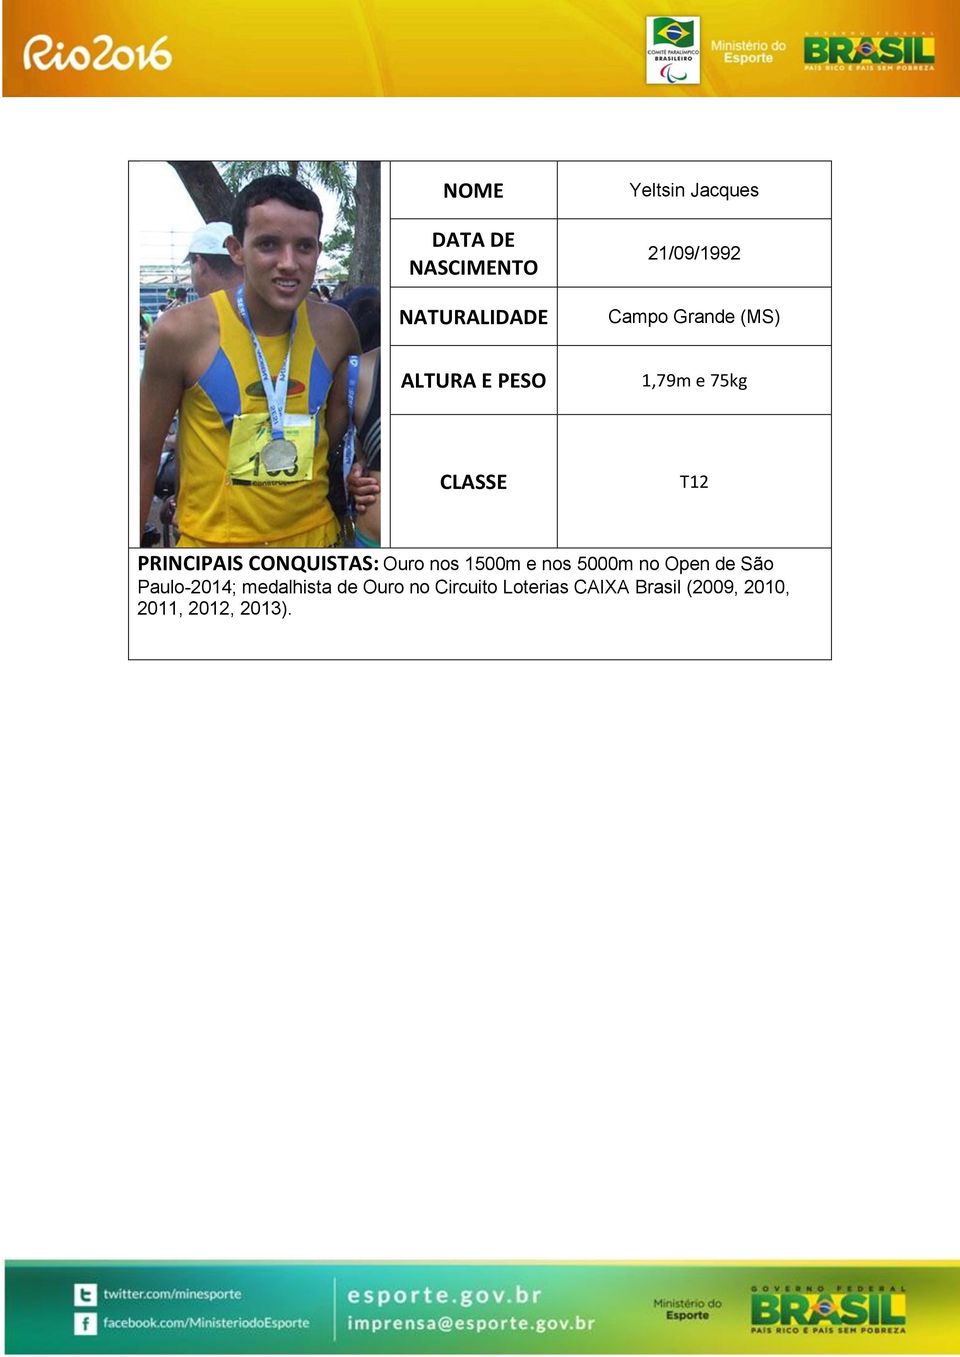 5000m no Open de São Paulo-2014; medalhista de Ouro no